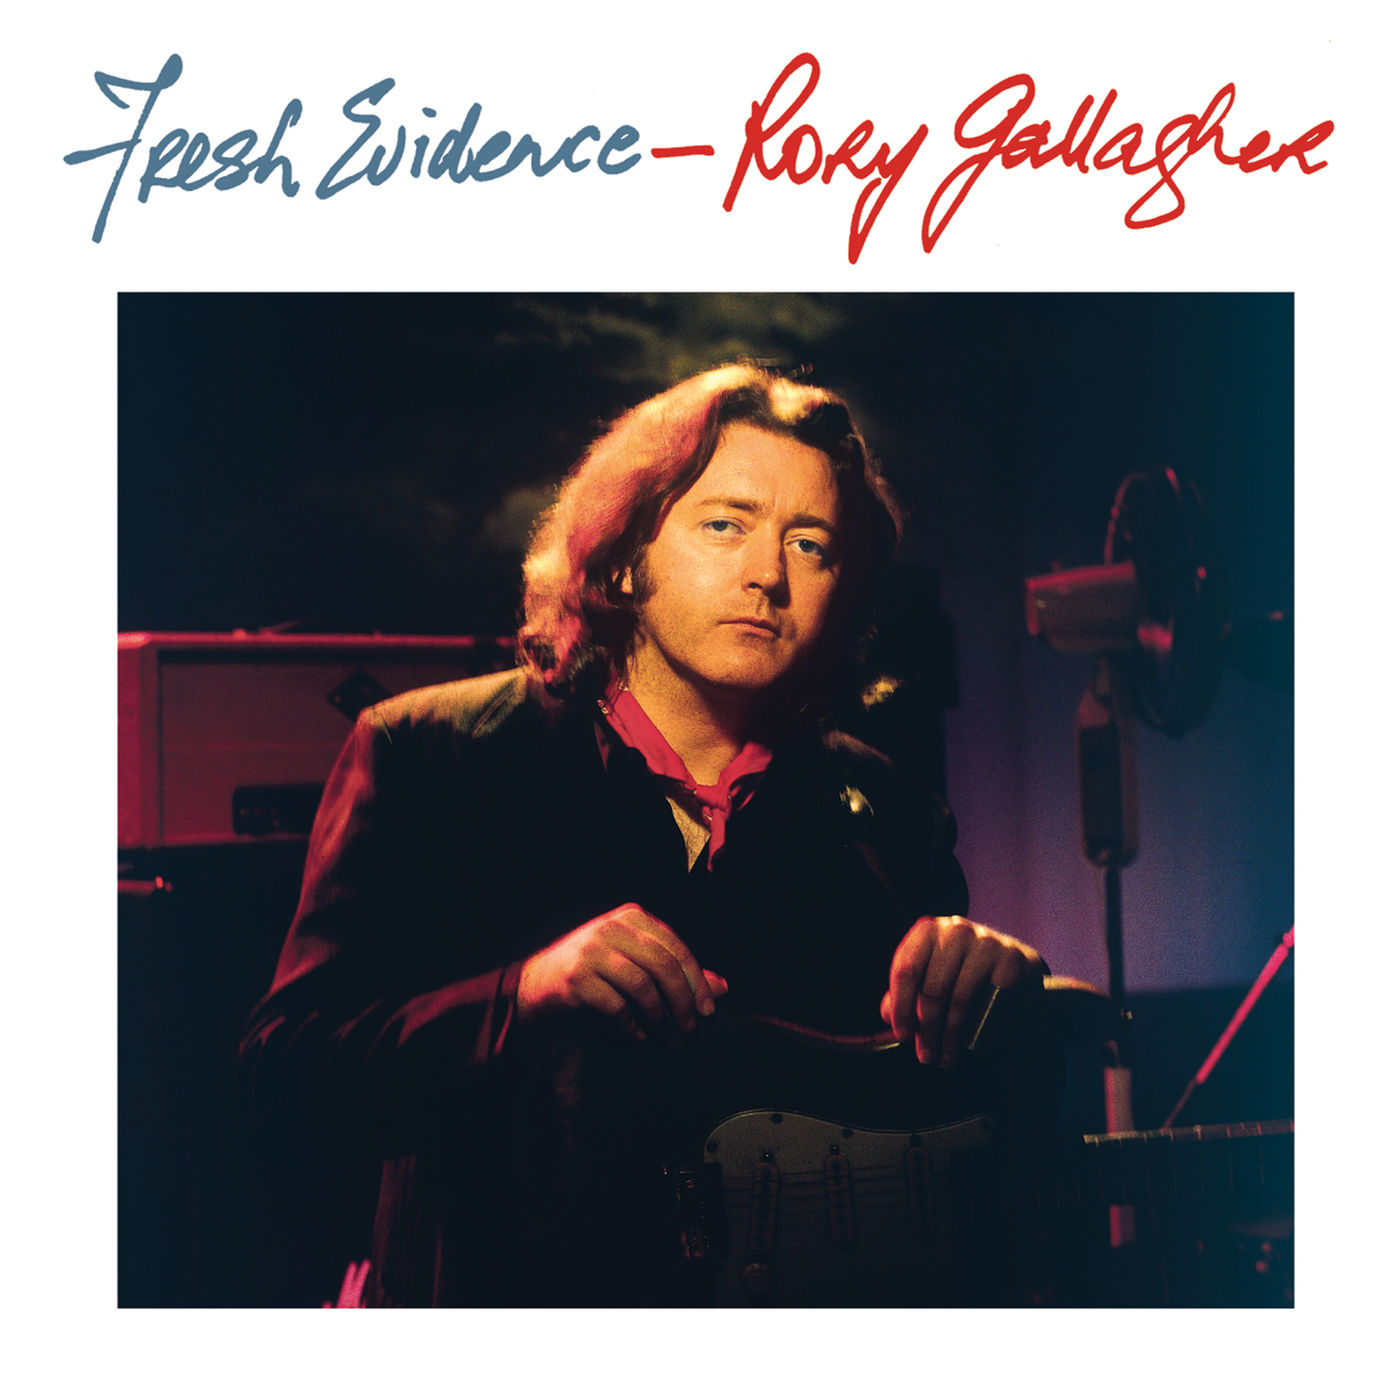 Rory Gallagher - 1990 - Fresh Evidence [2020 HDtracks]